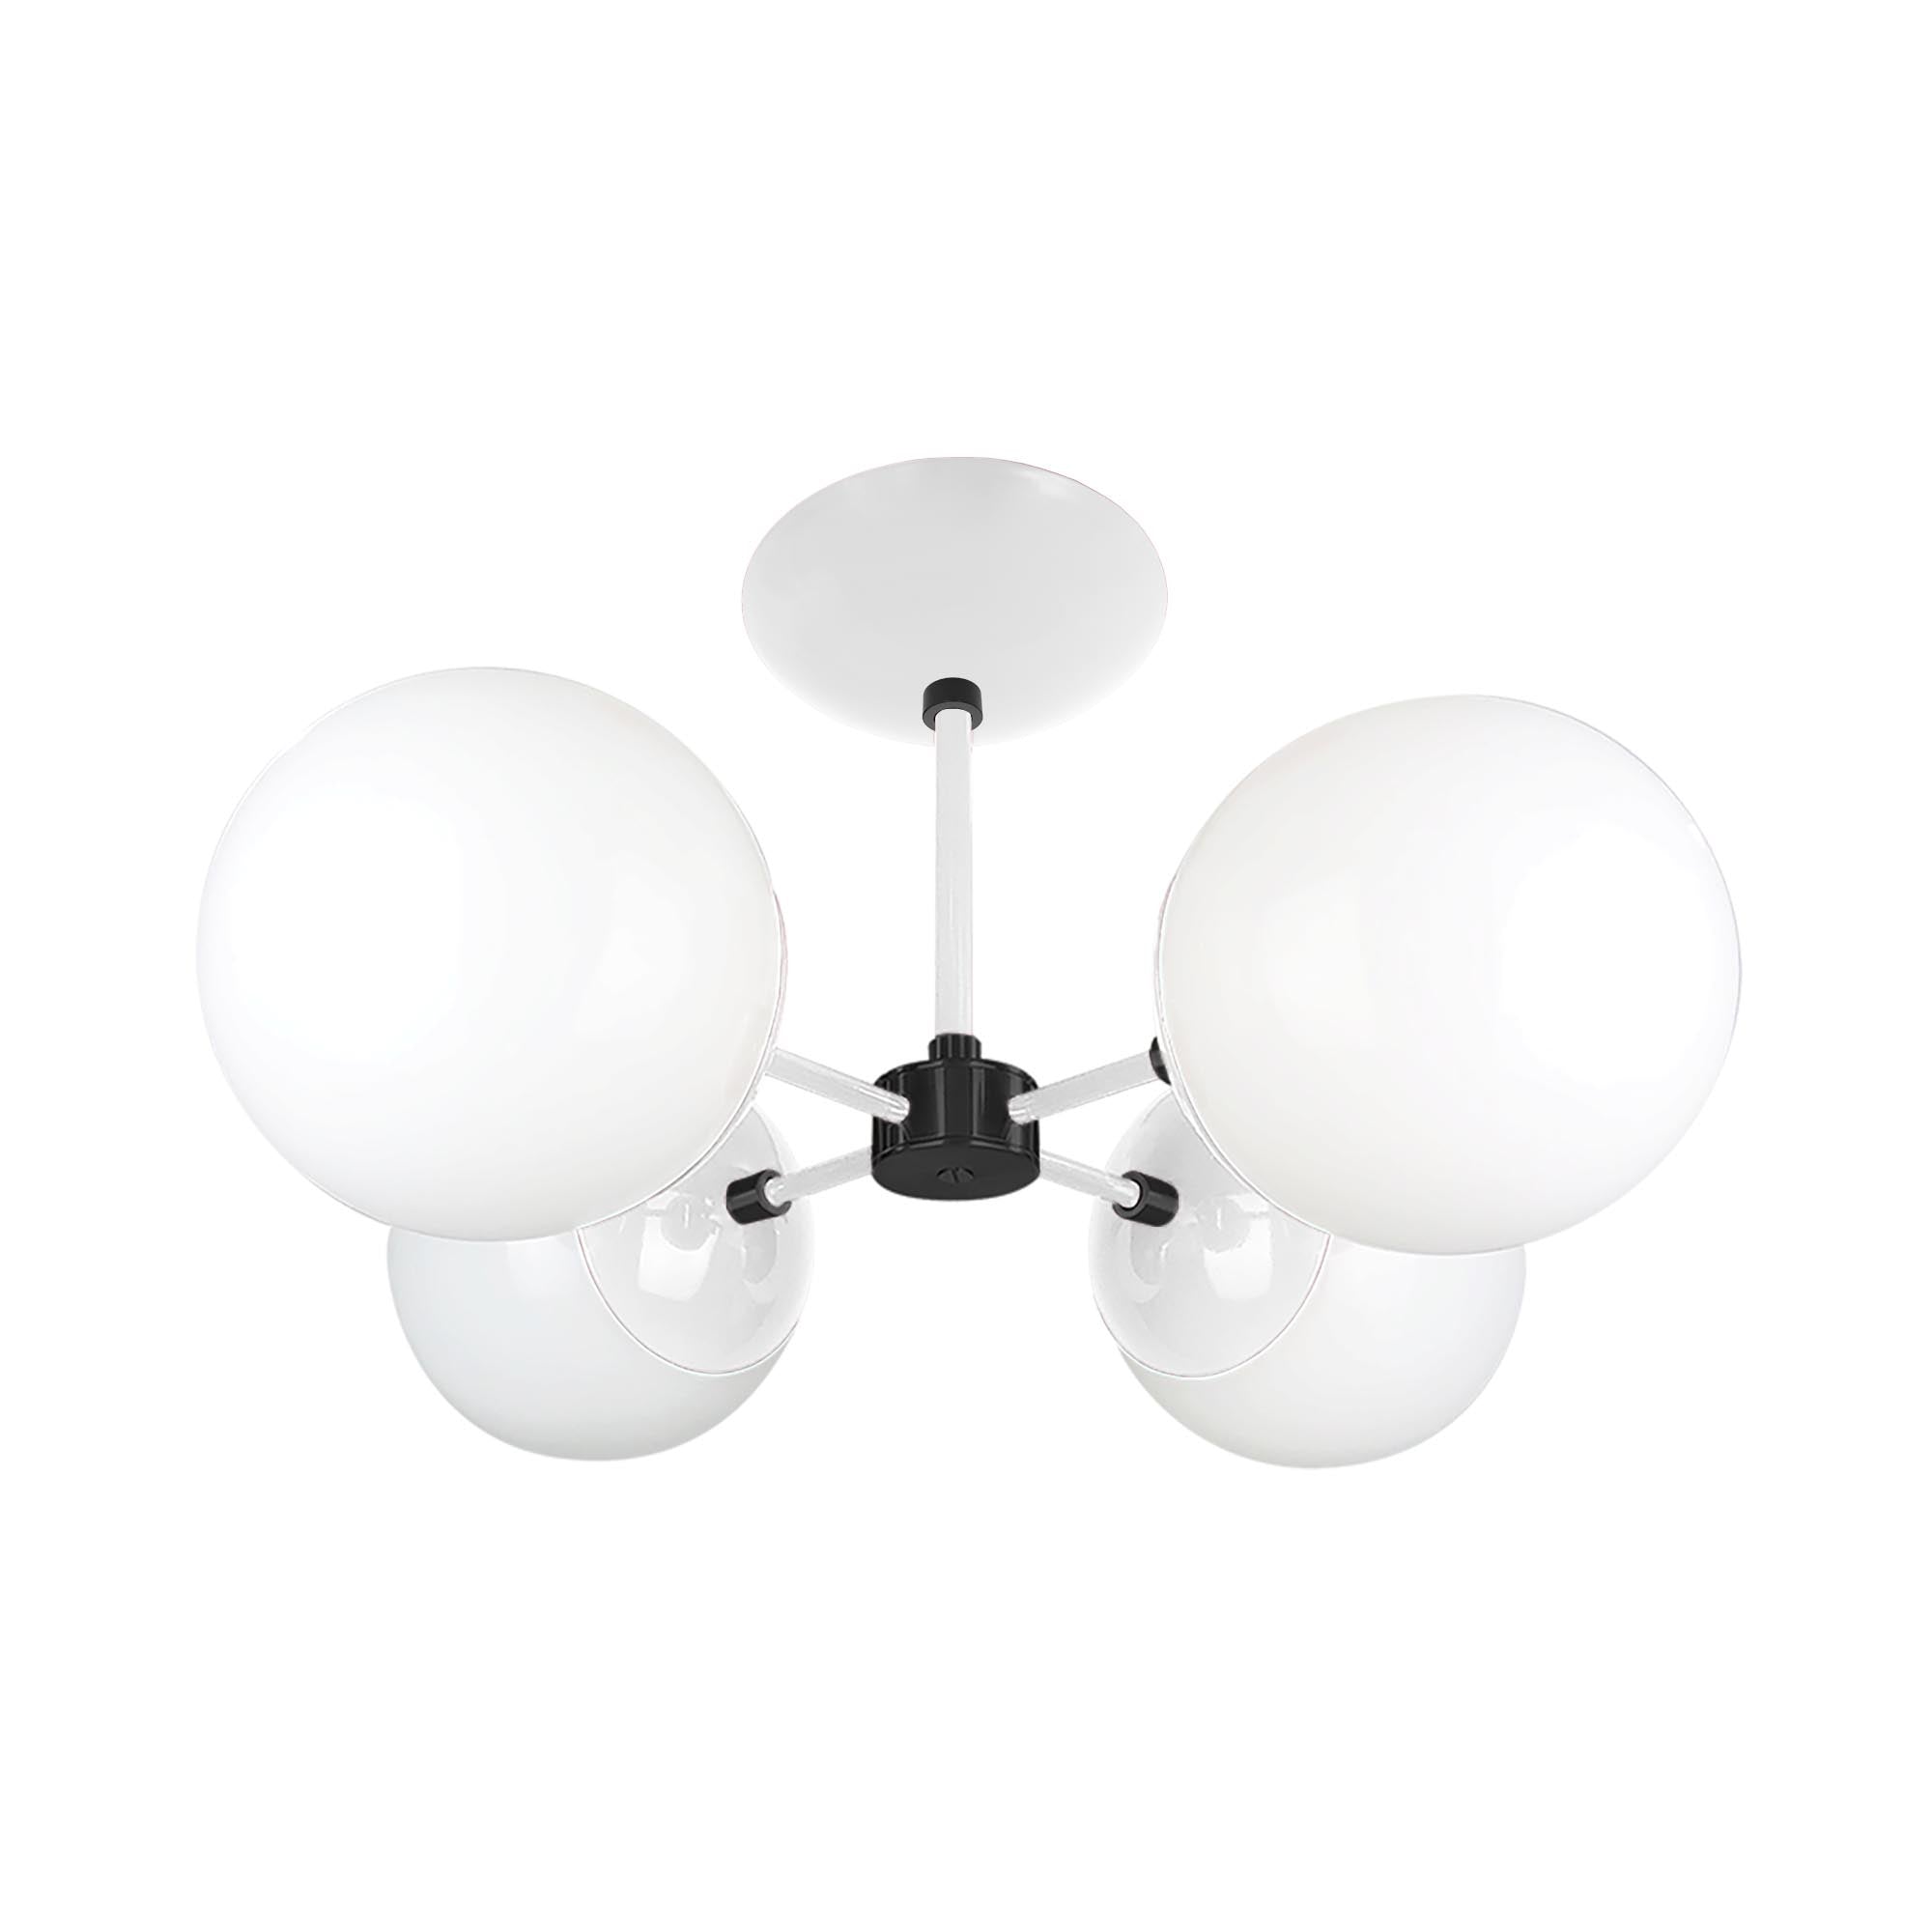 Black and white color Orbi flush mount Dutton Brown lighting